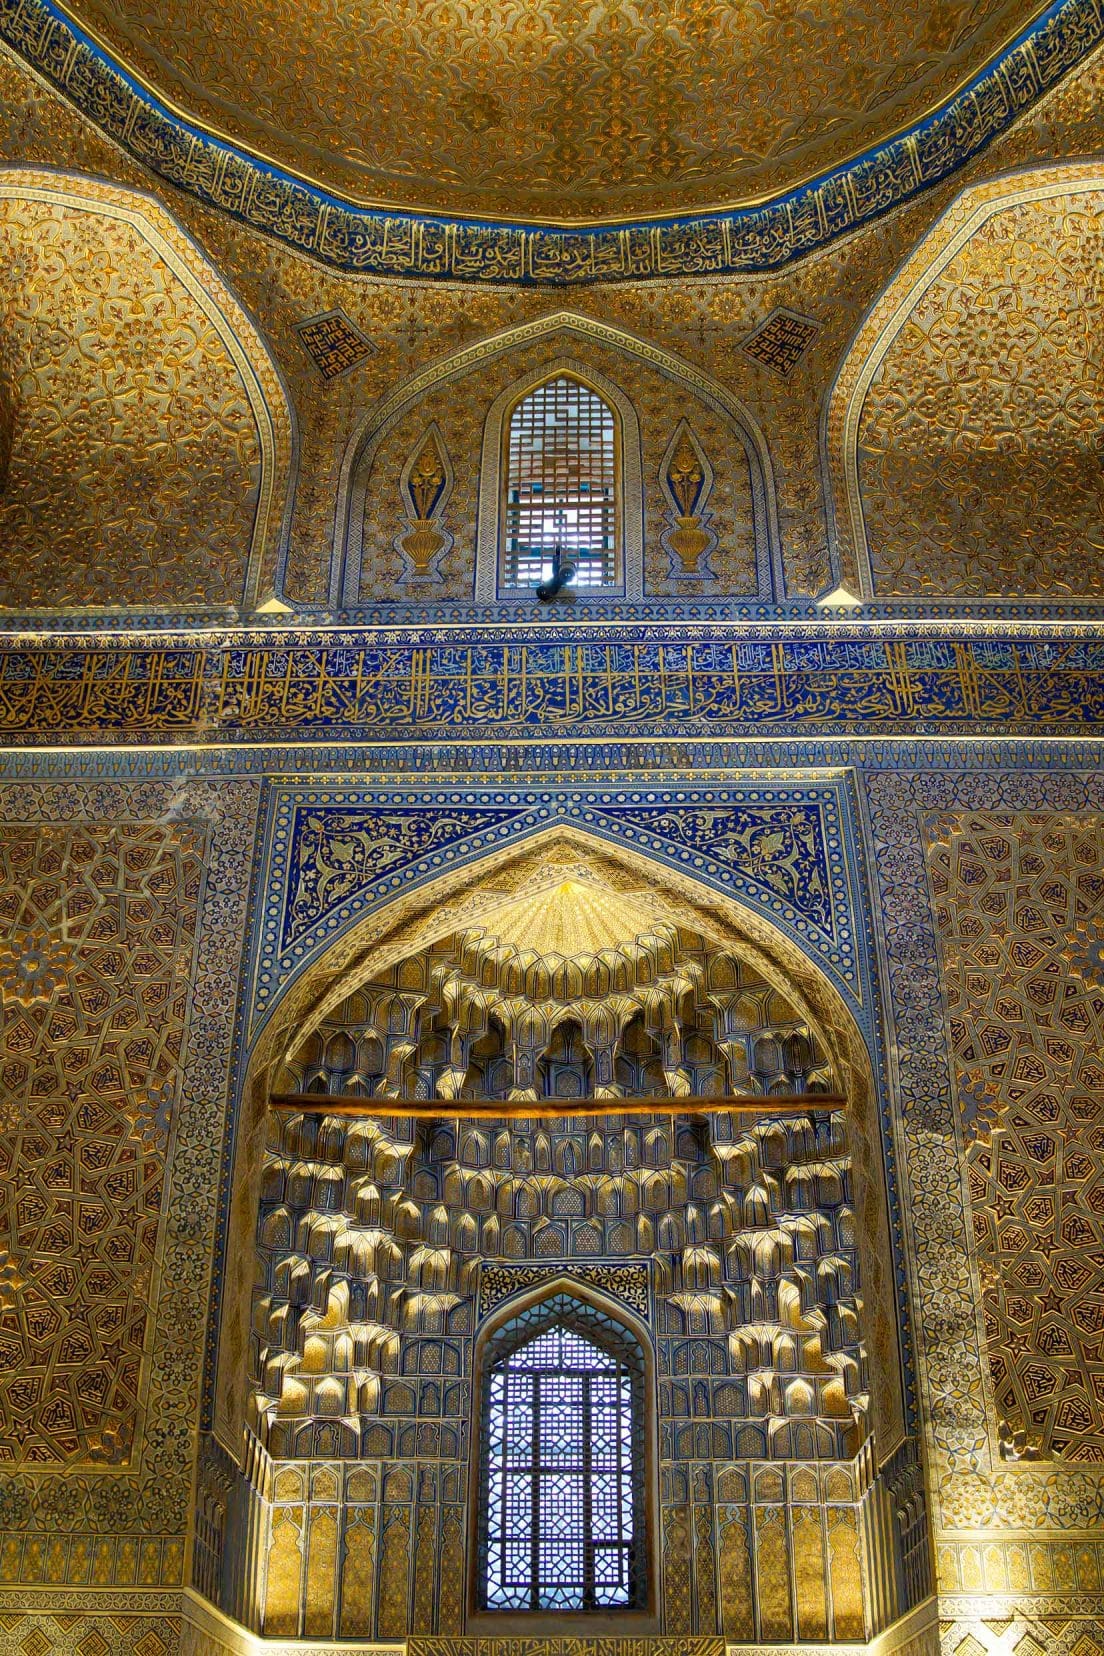 Temur's-burial-chamber-mosaics,-Samarkand